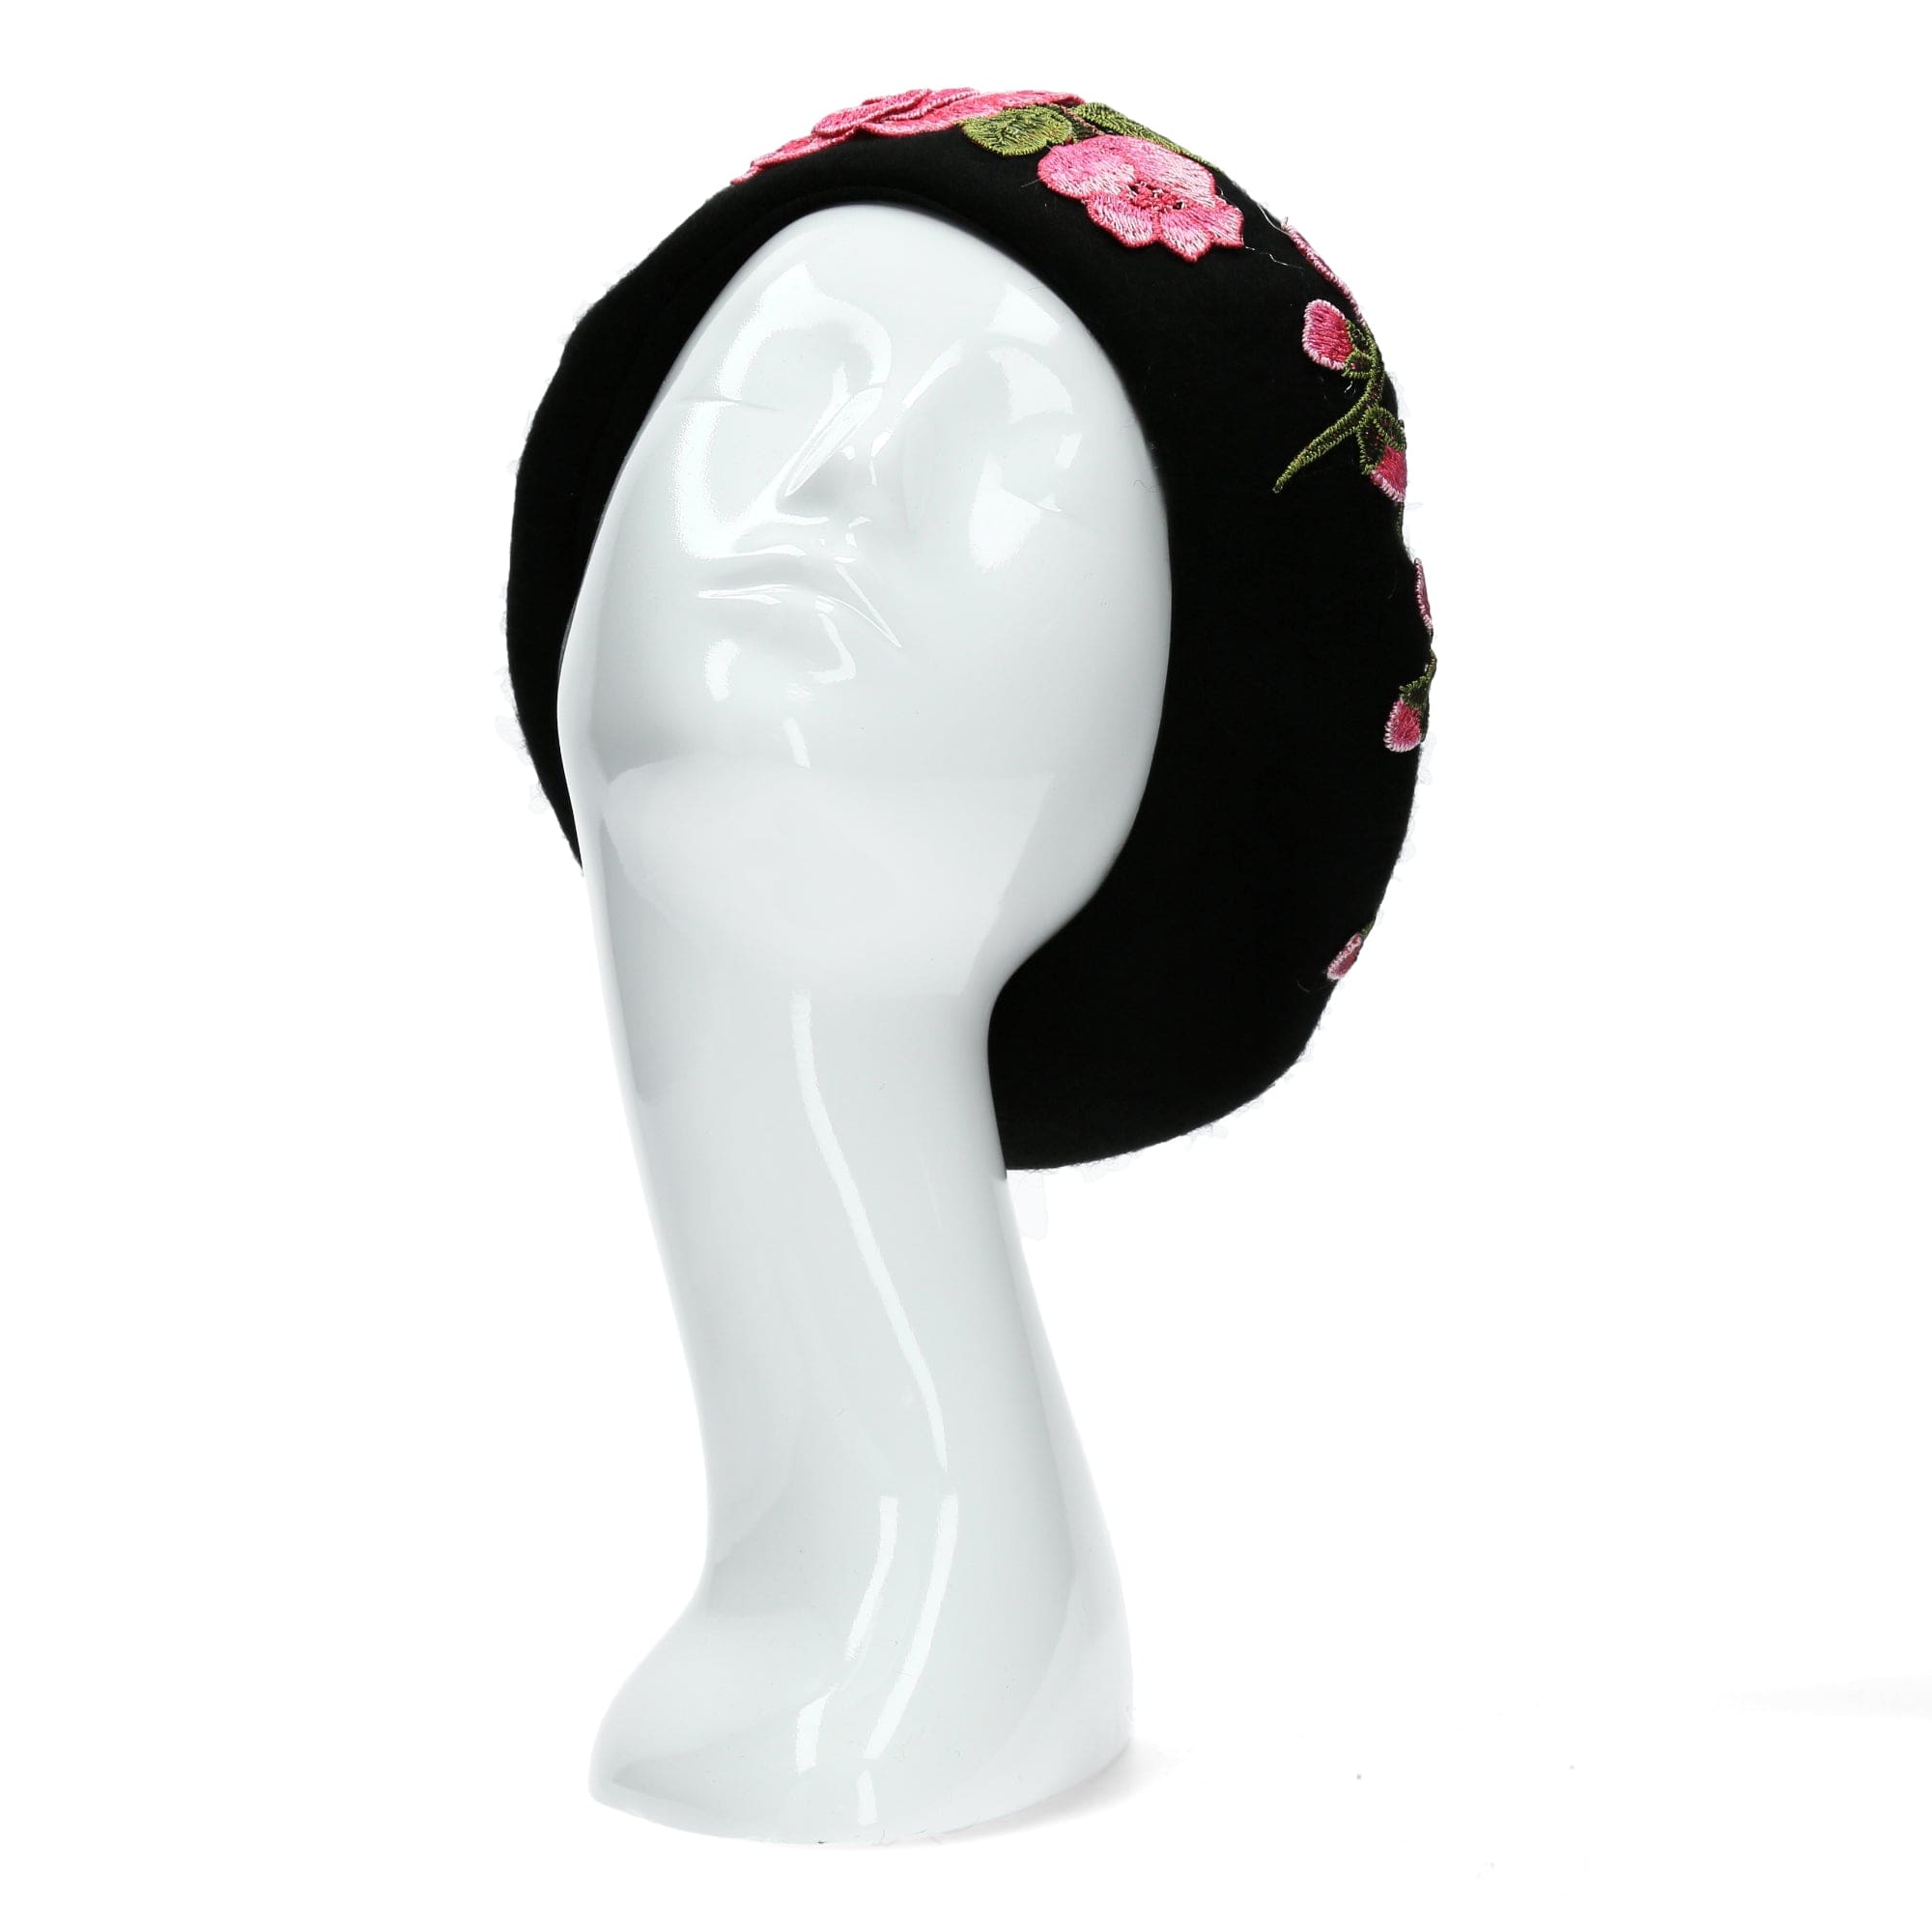 Emylle flower beret - Hats